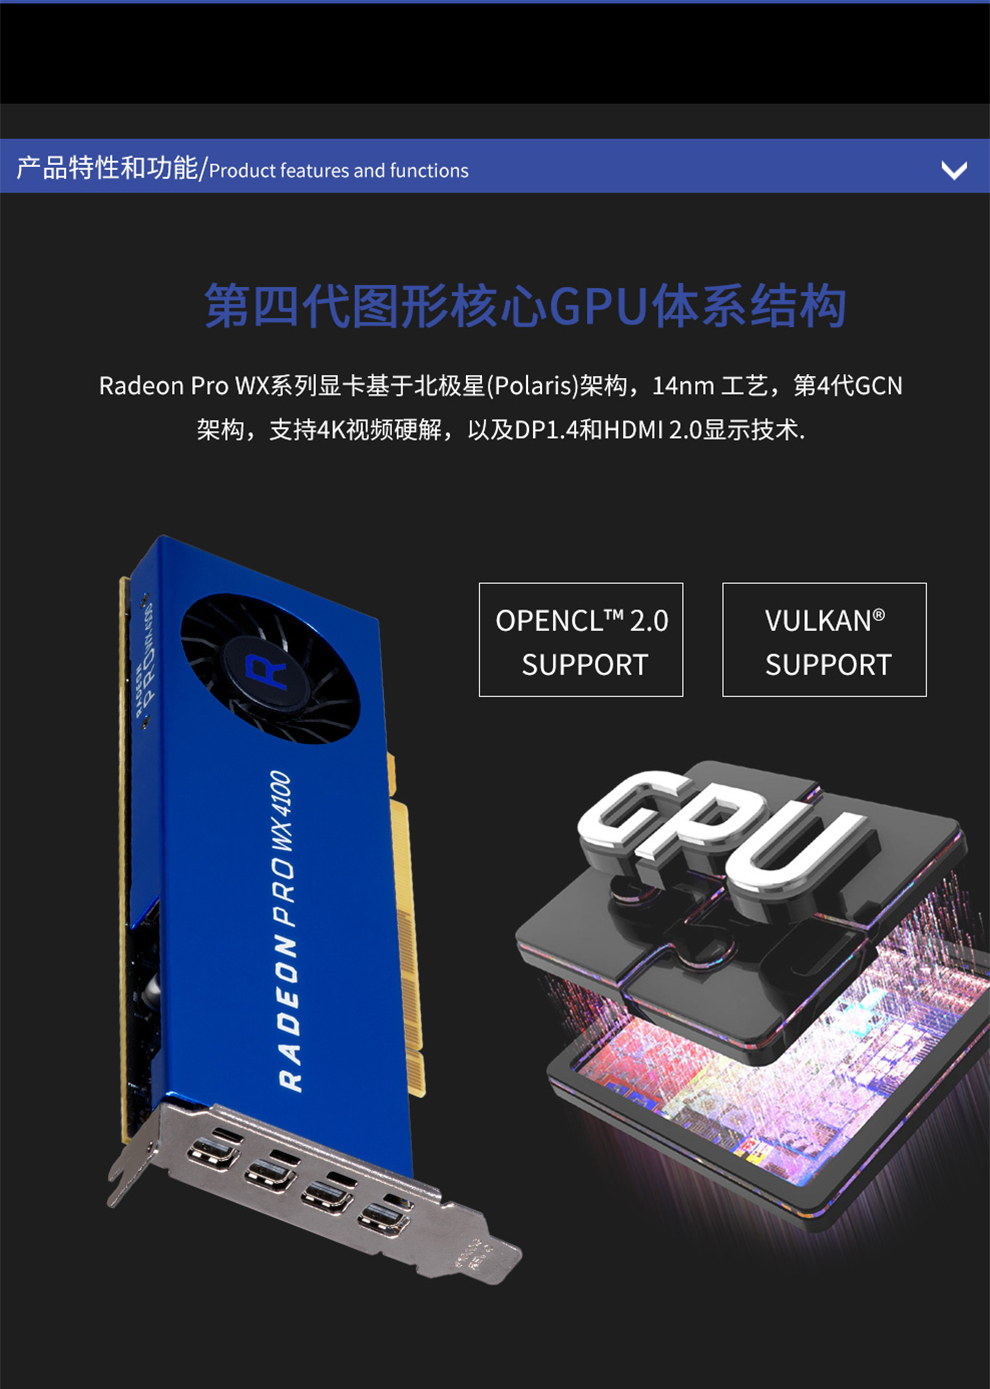 AMD Radeon Pro WX 4100 专业显卡